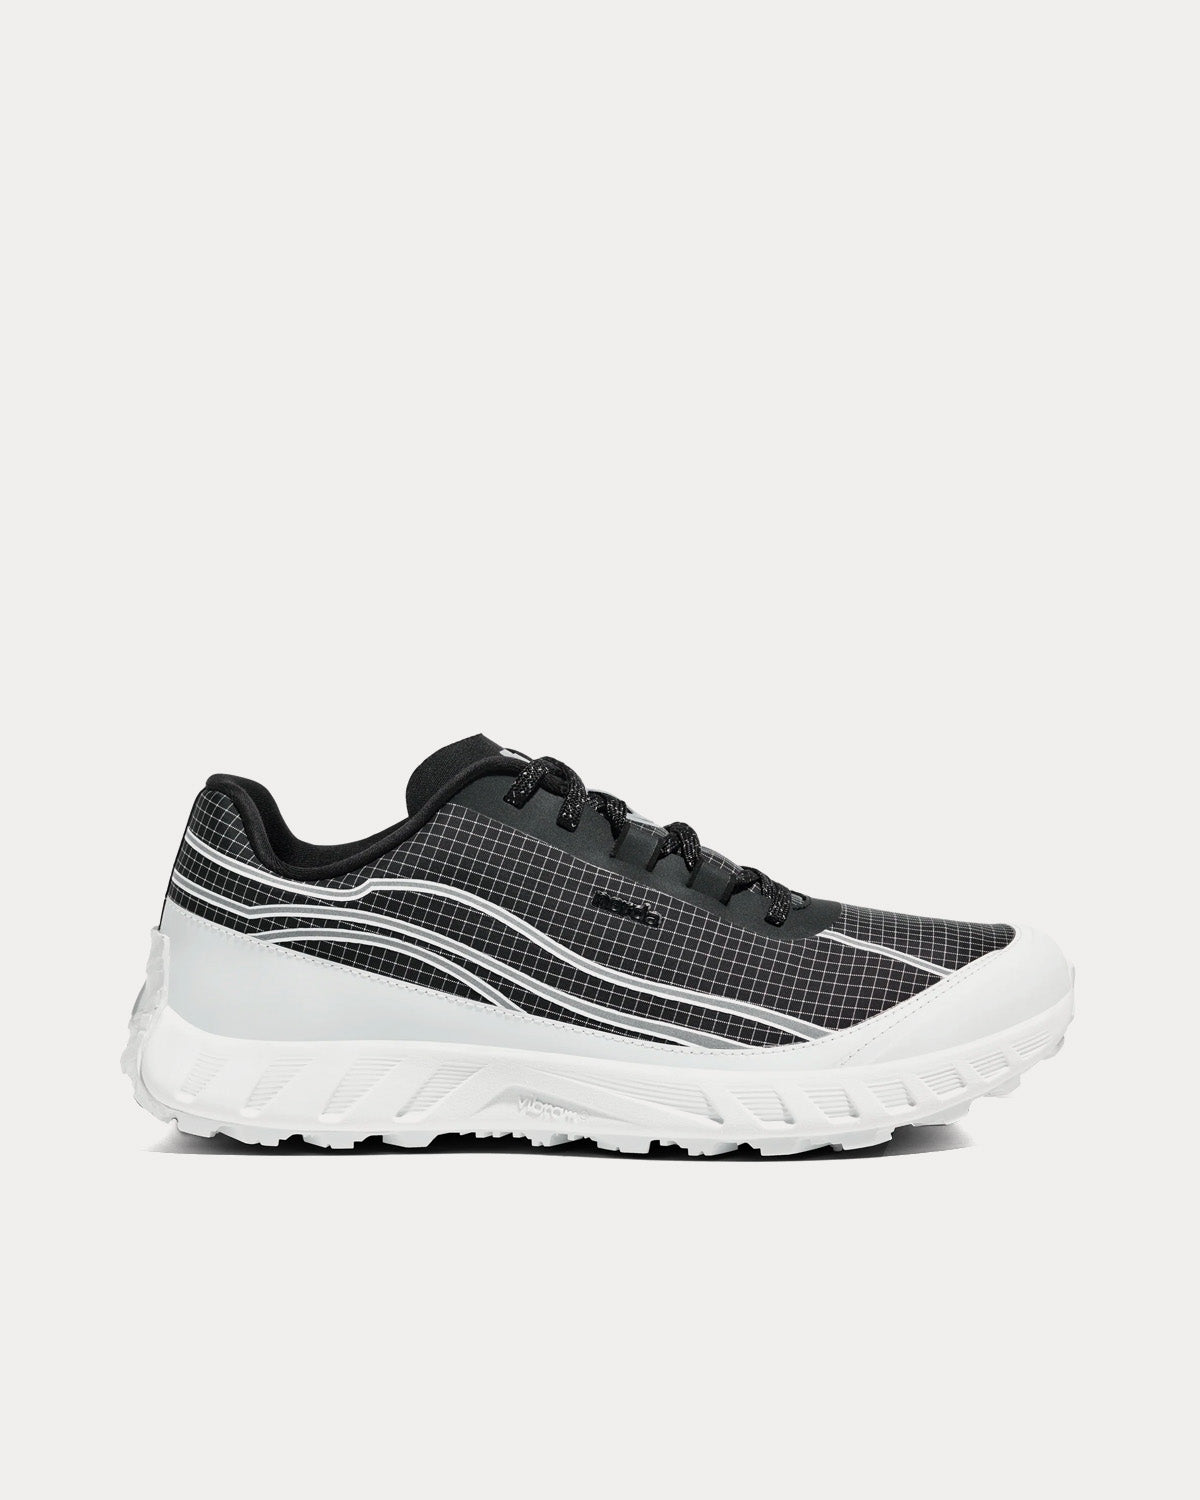 Norda 002 Black / White Running Shoes - Sneak in Peace